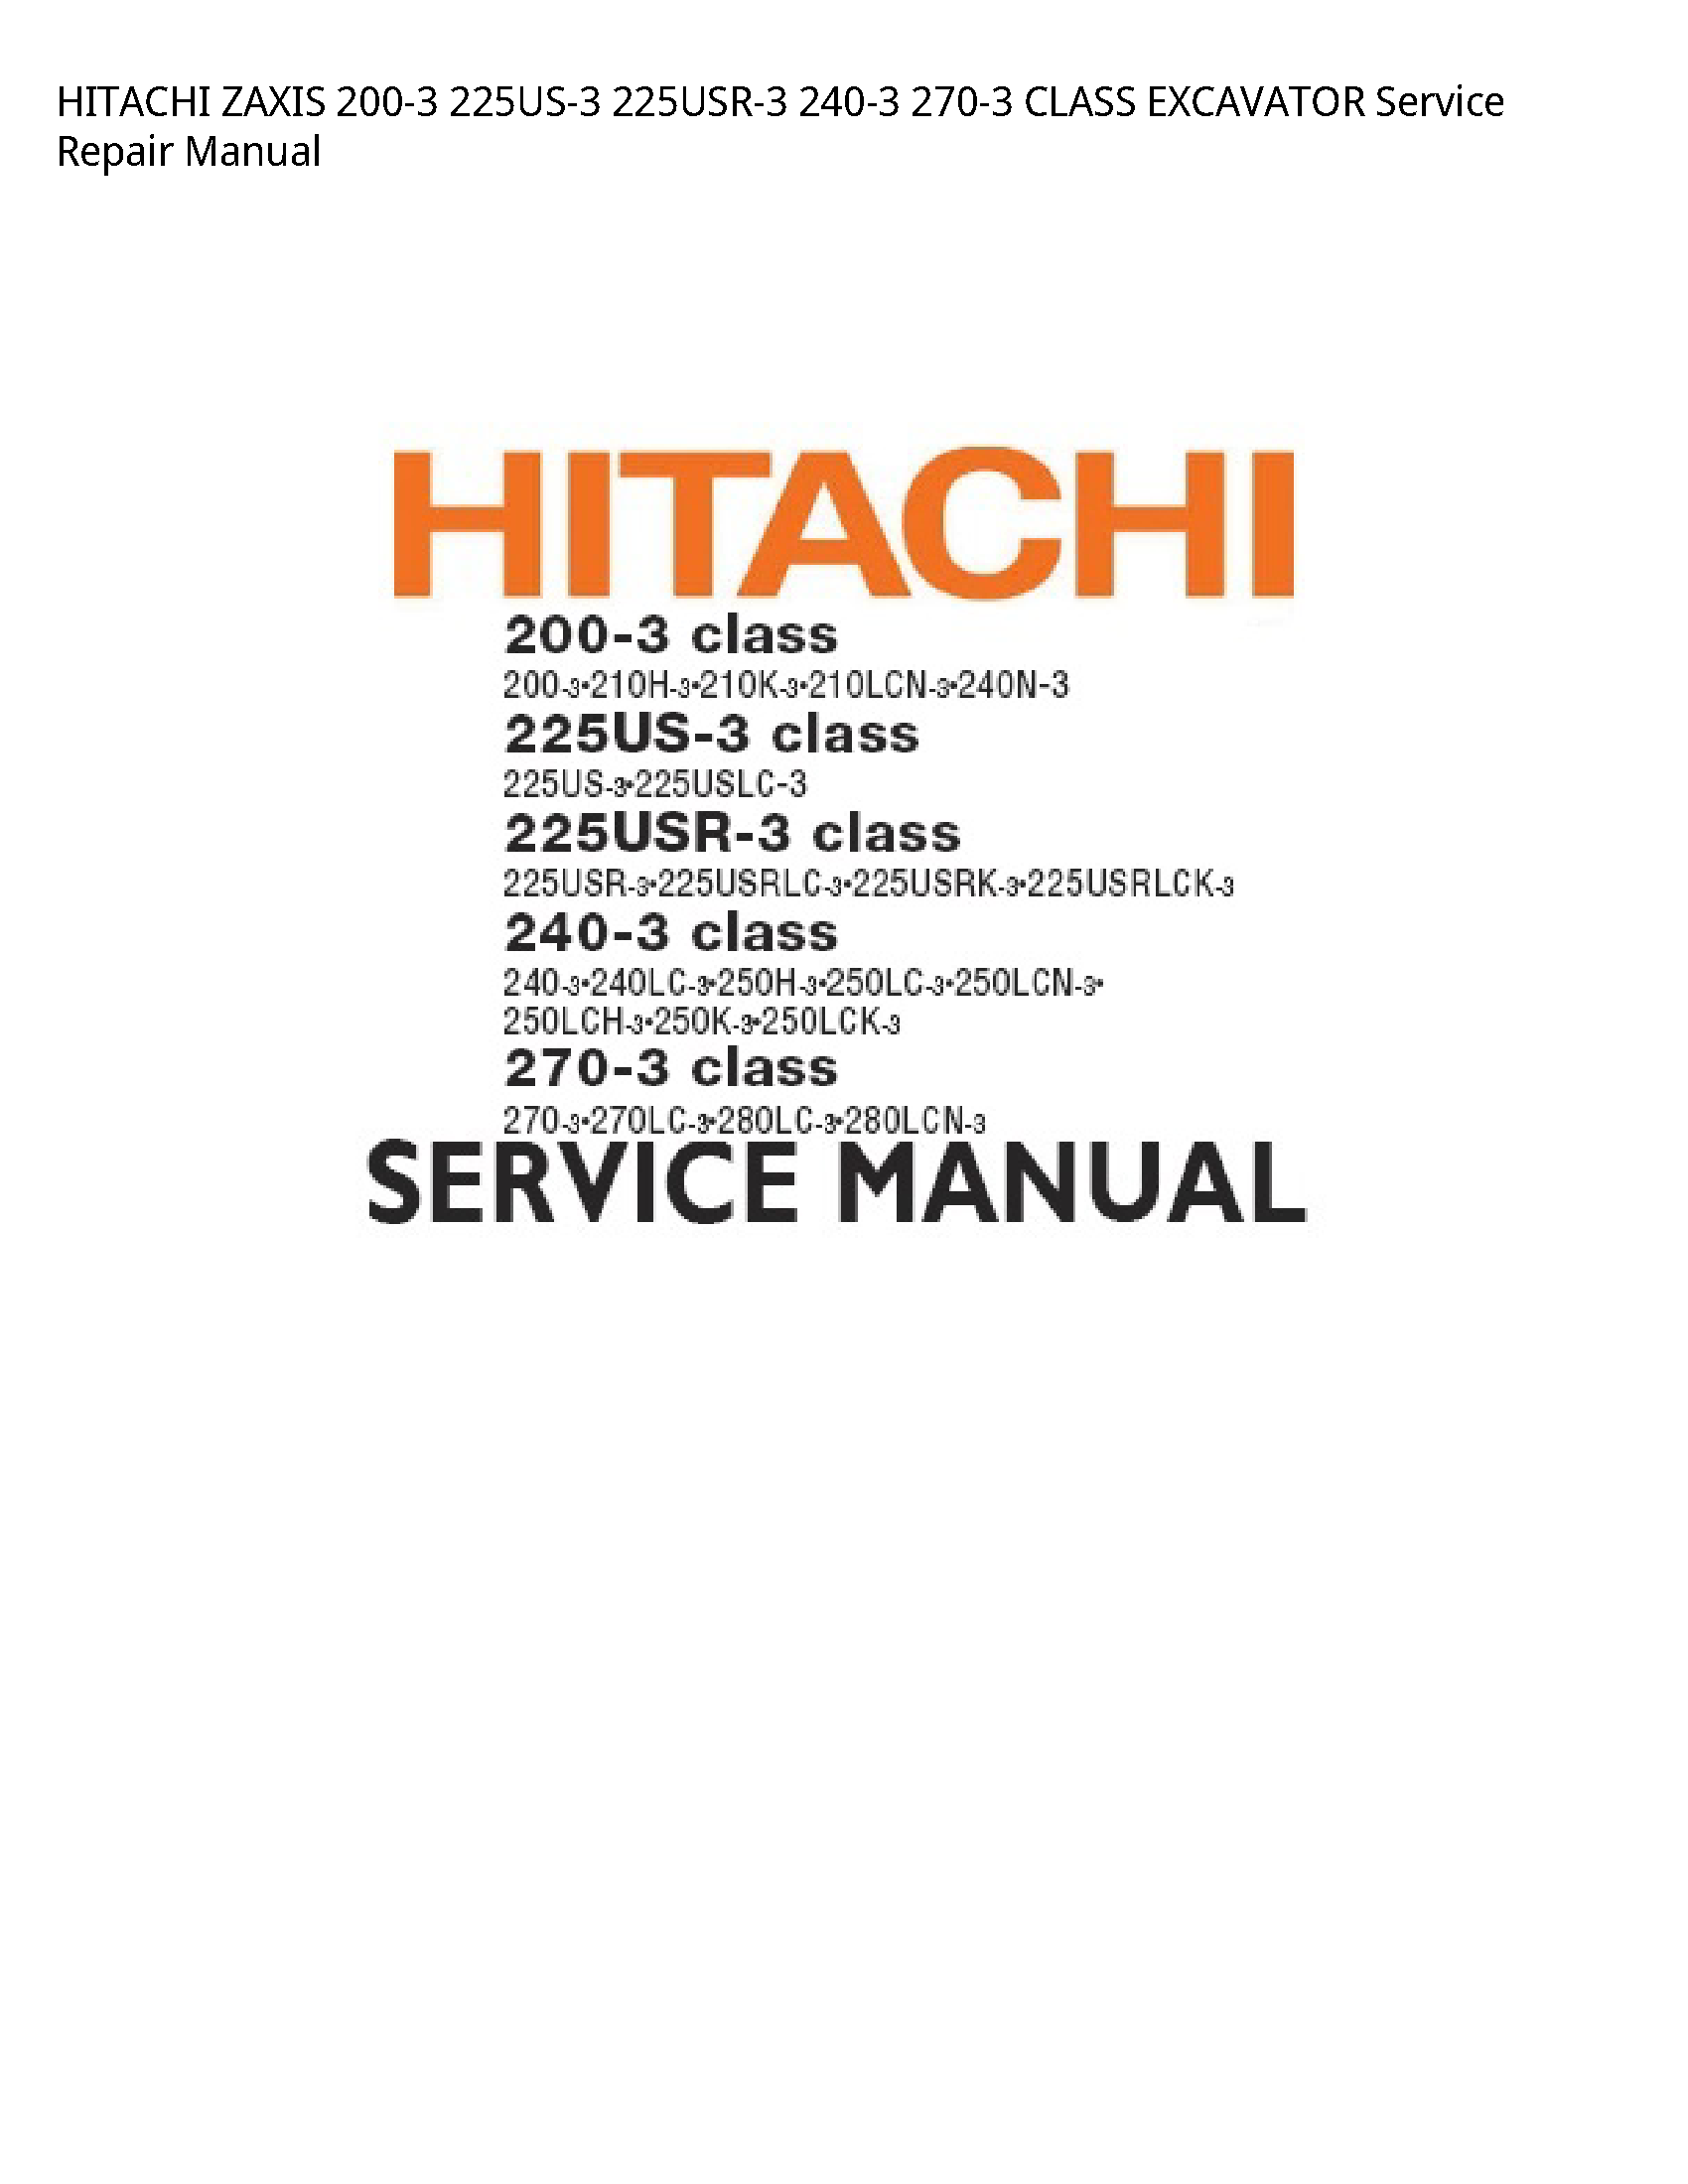 Hitachi 200-3 ZAXIS CLASS EXCAVATOR manual